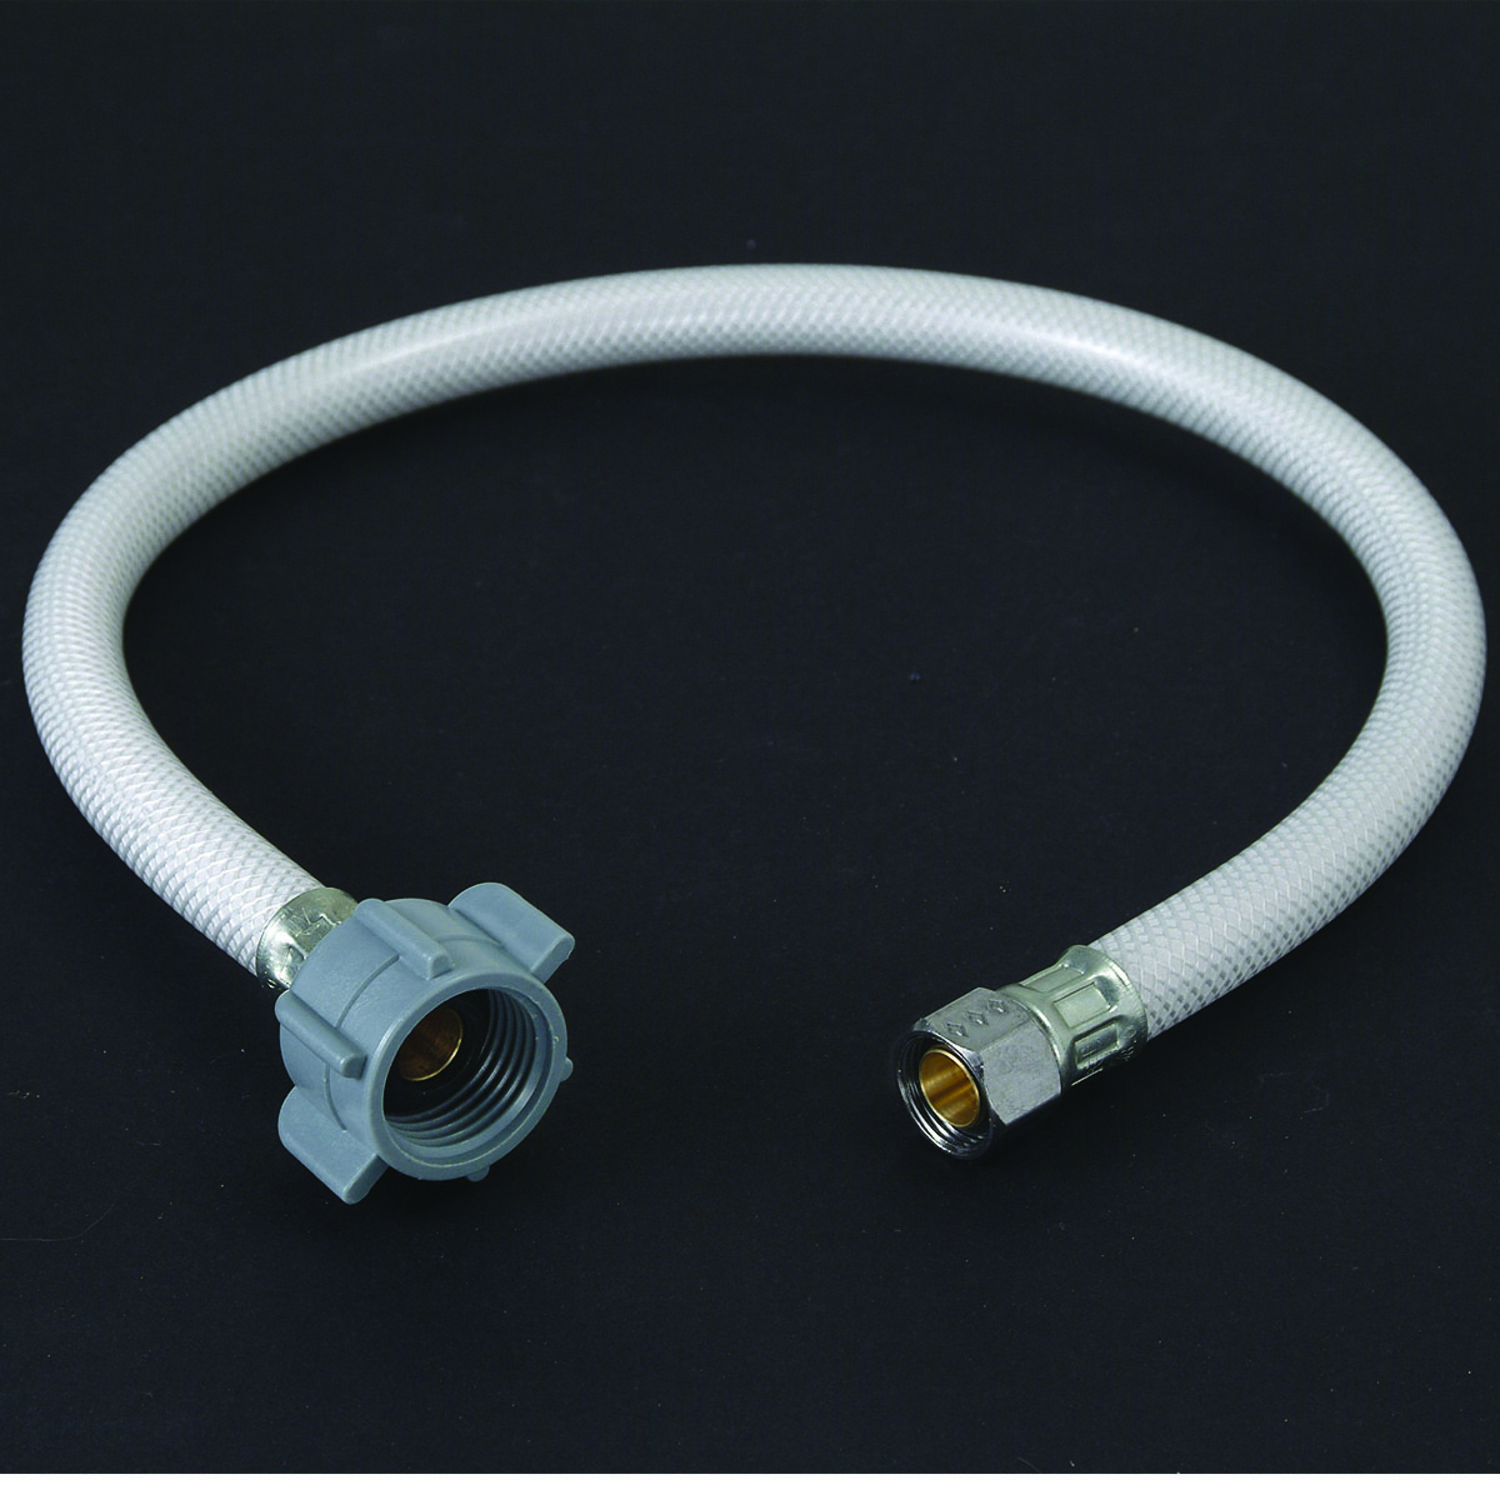 UPC 039166001385 product image for BrassCraft Plumb Shop PVC Faucet Connector | upcitemdb.com